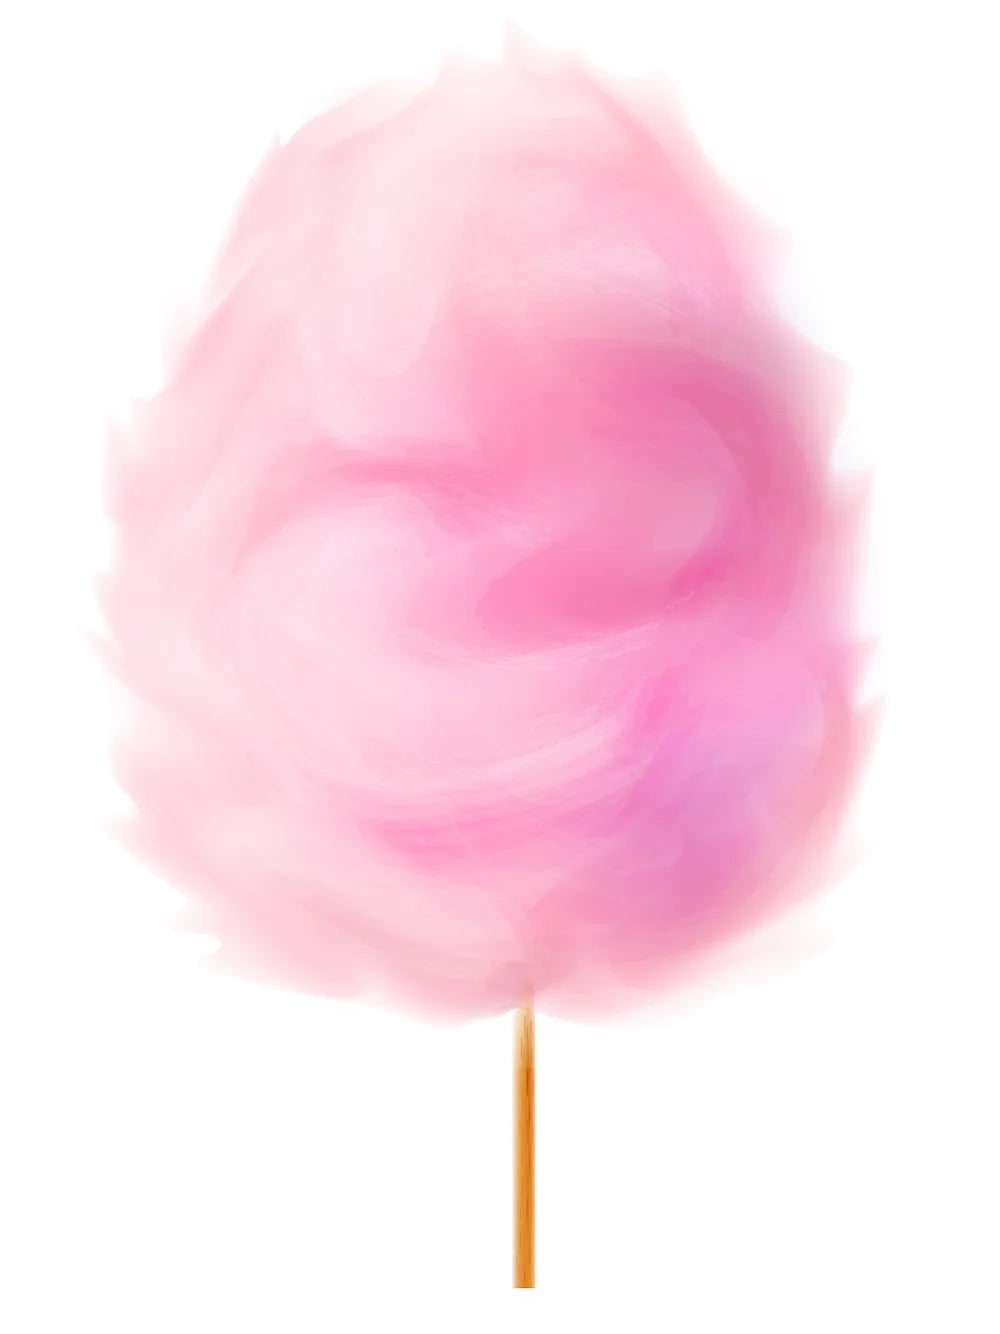 Supreme Cotton Candy Sugar of Pink Strawberry 粉紅士多啤梨/草莓味棉花糖砂糖